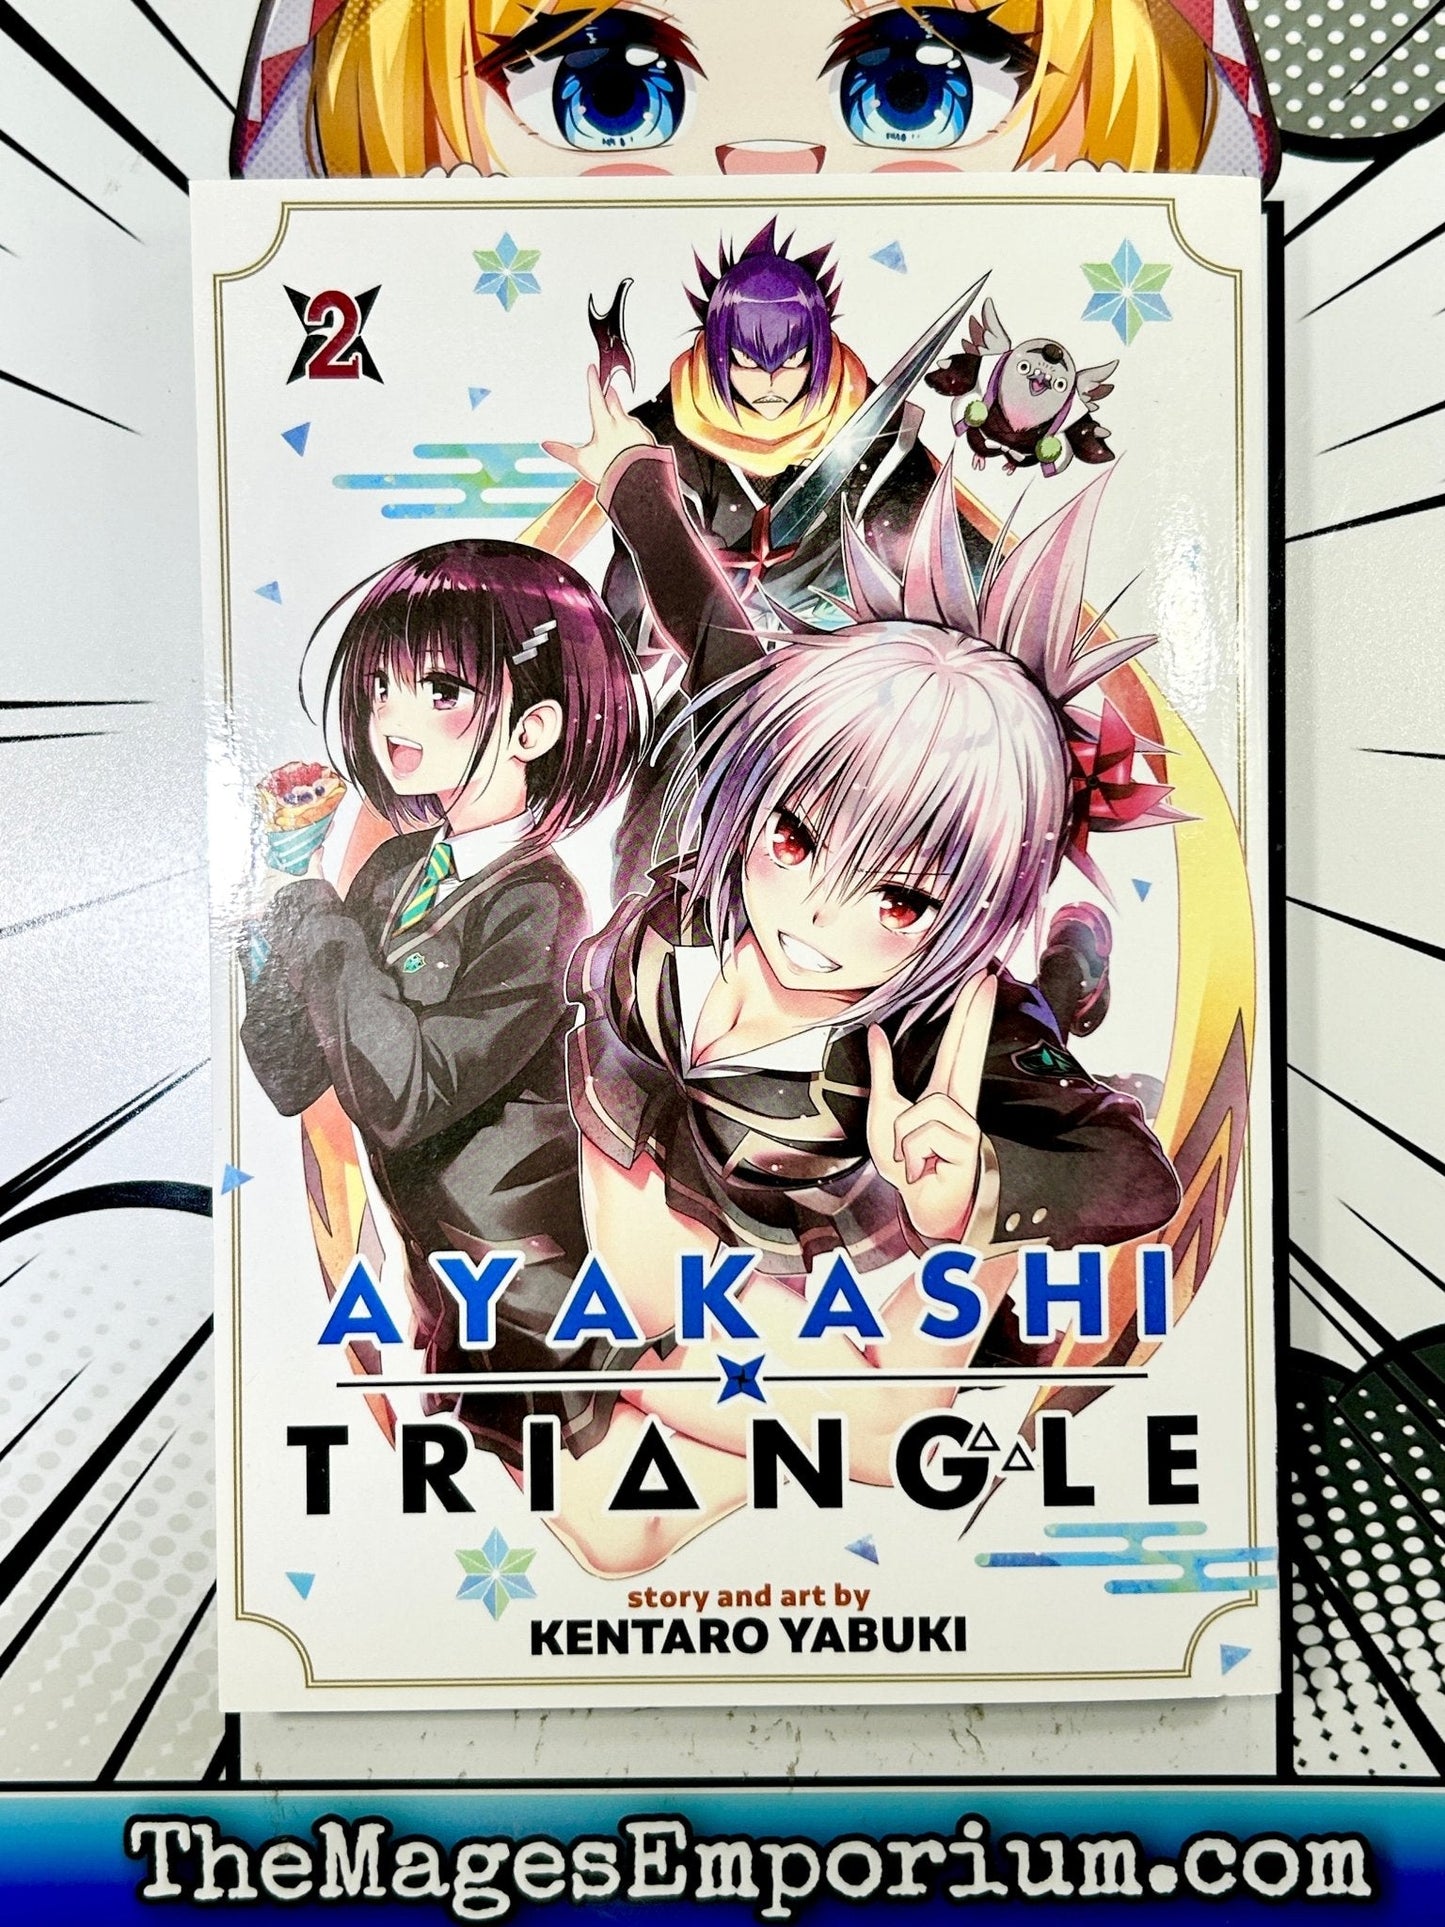 Ayakashi Triangle Vol 2